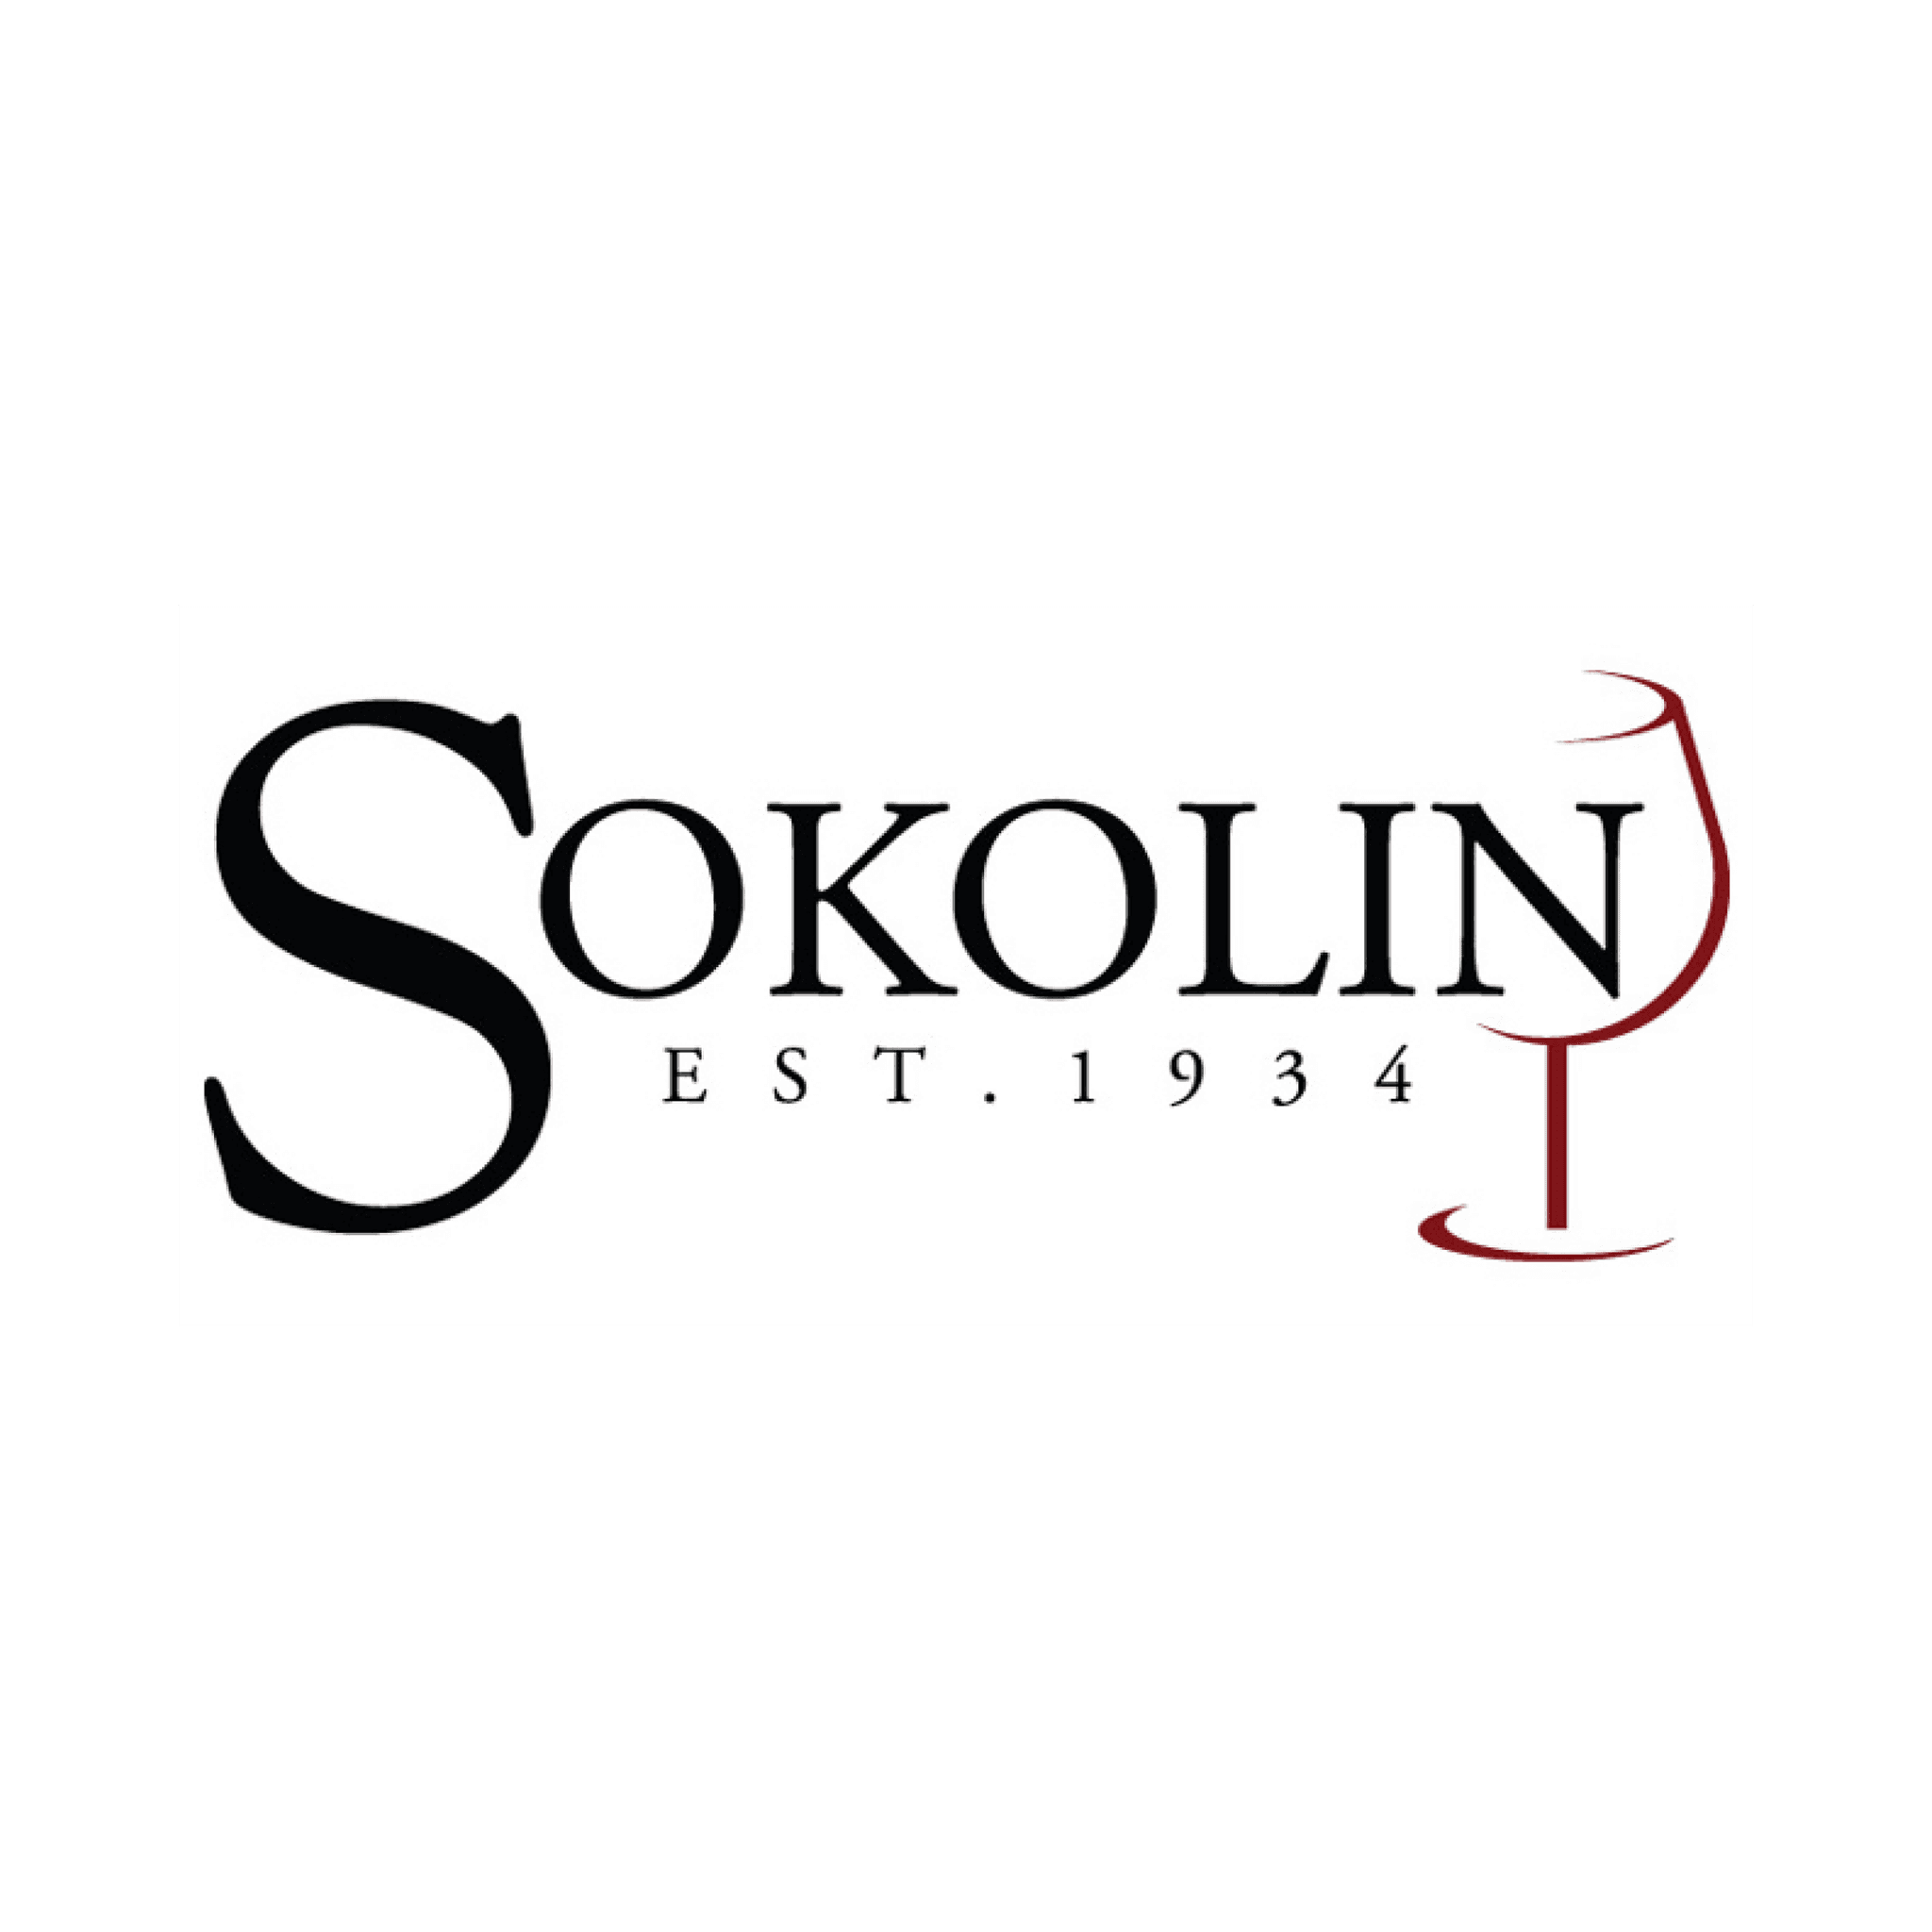 Sokolin About Logo